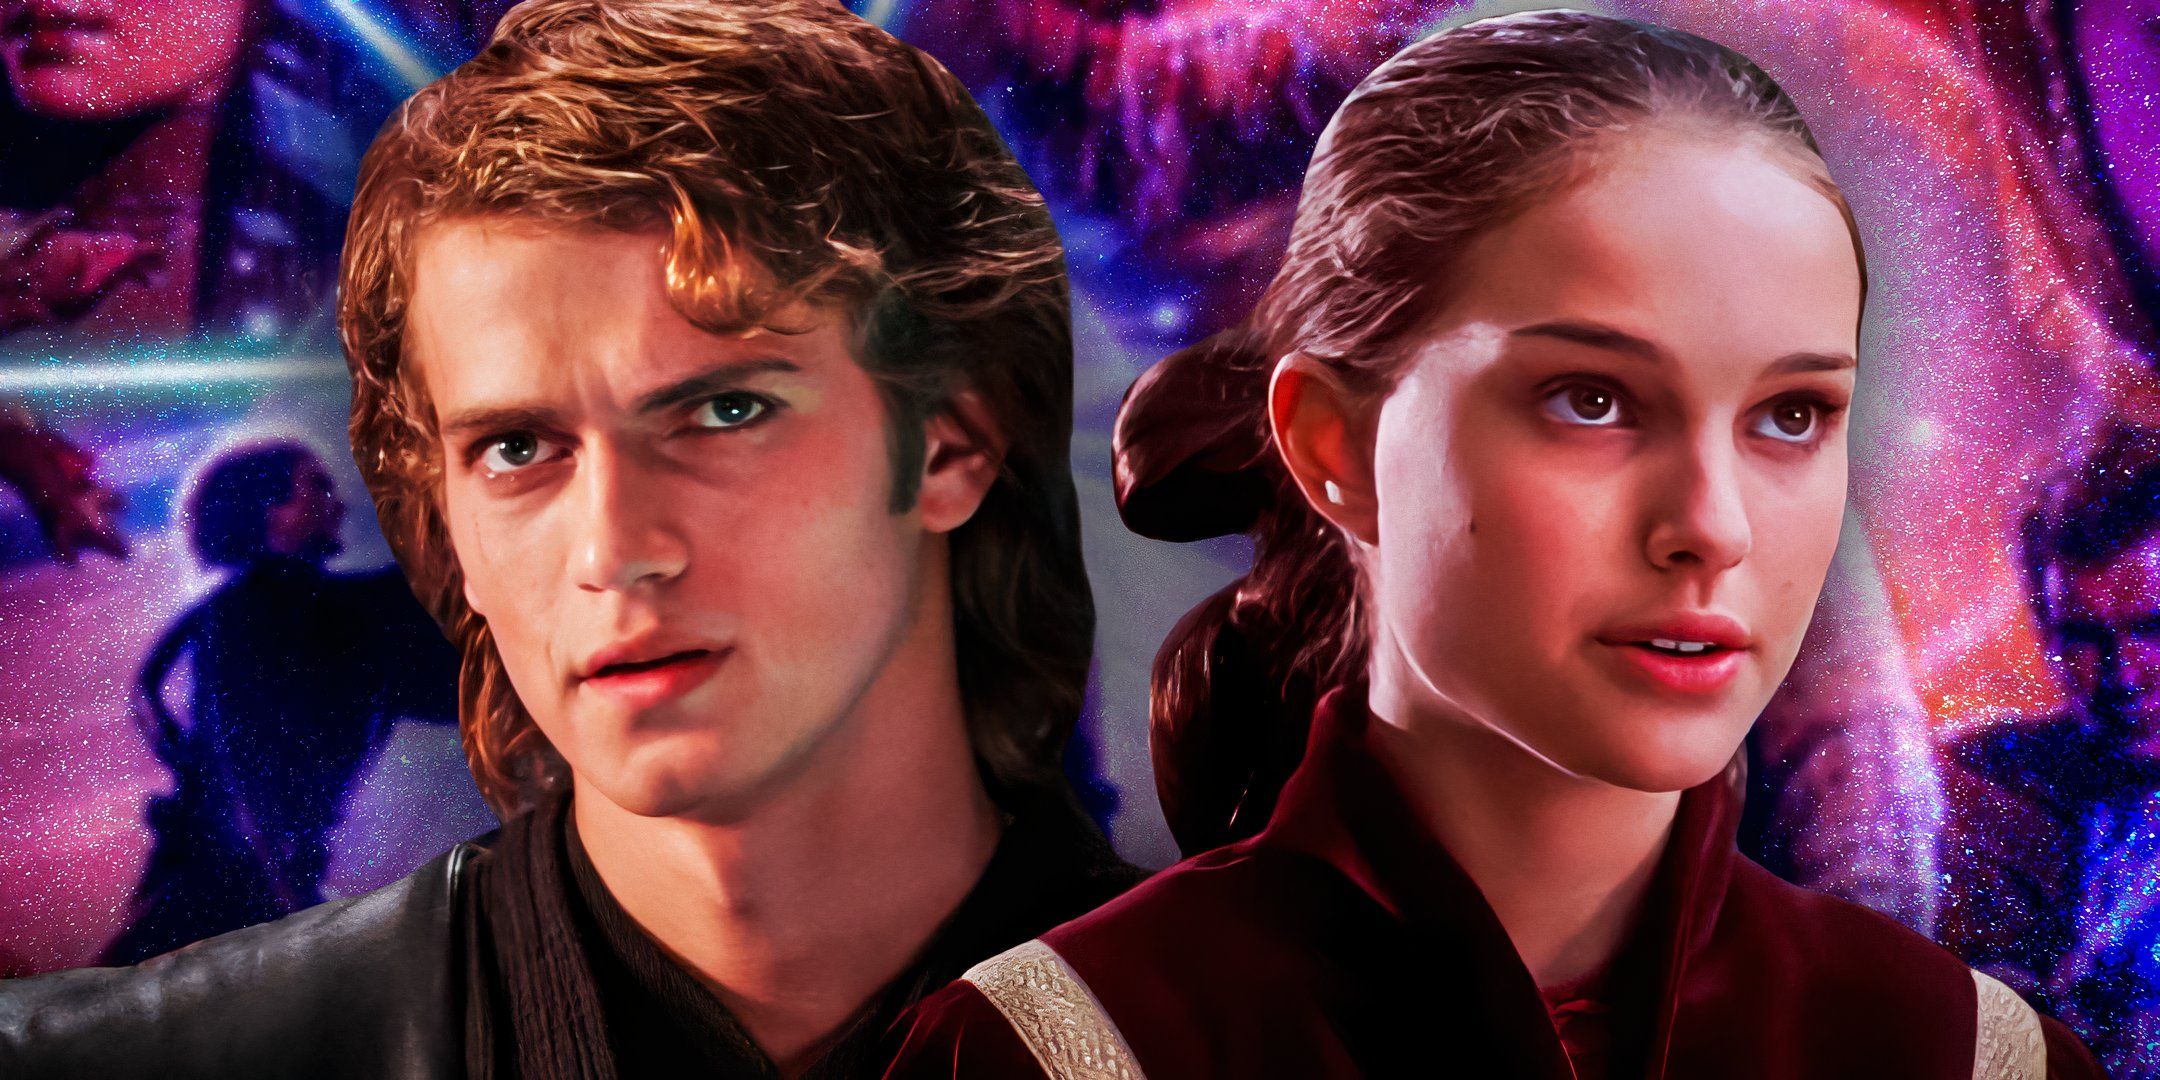 Hayden Christensen's Anakin Skywalker and Natalie Portman's Padmé Amidala in the Star Wars prequels, edited over a poster